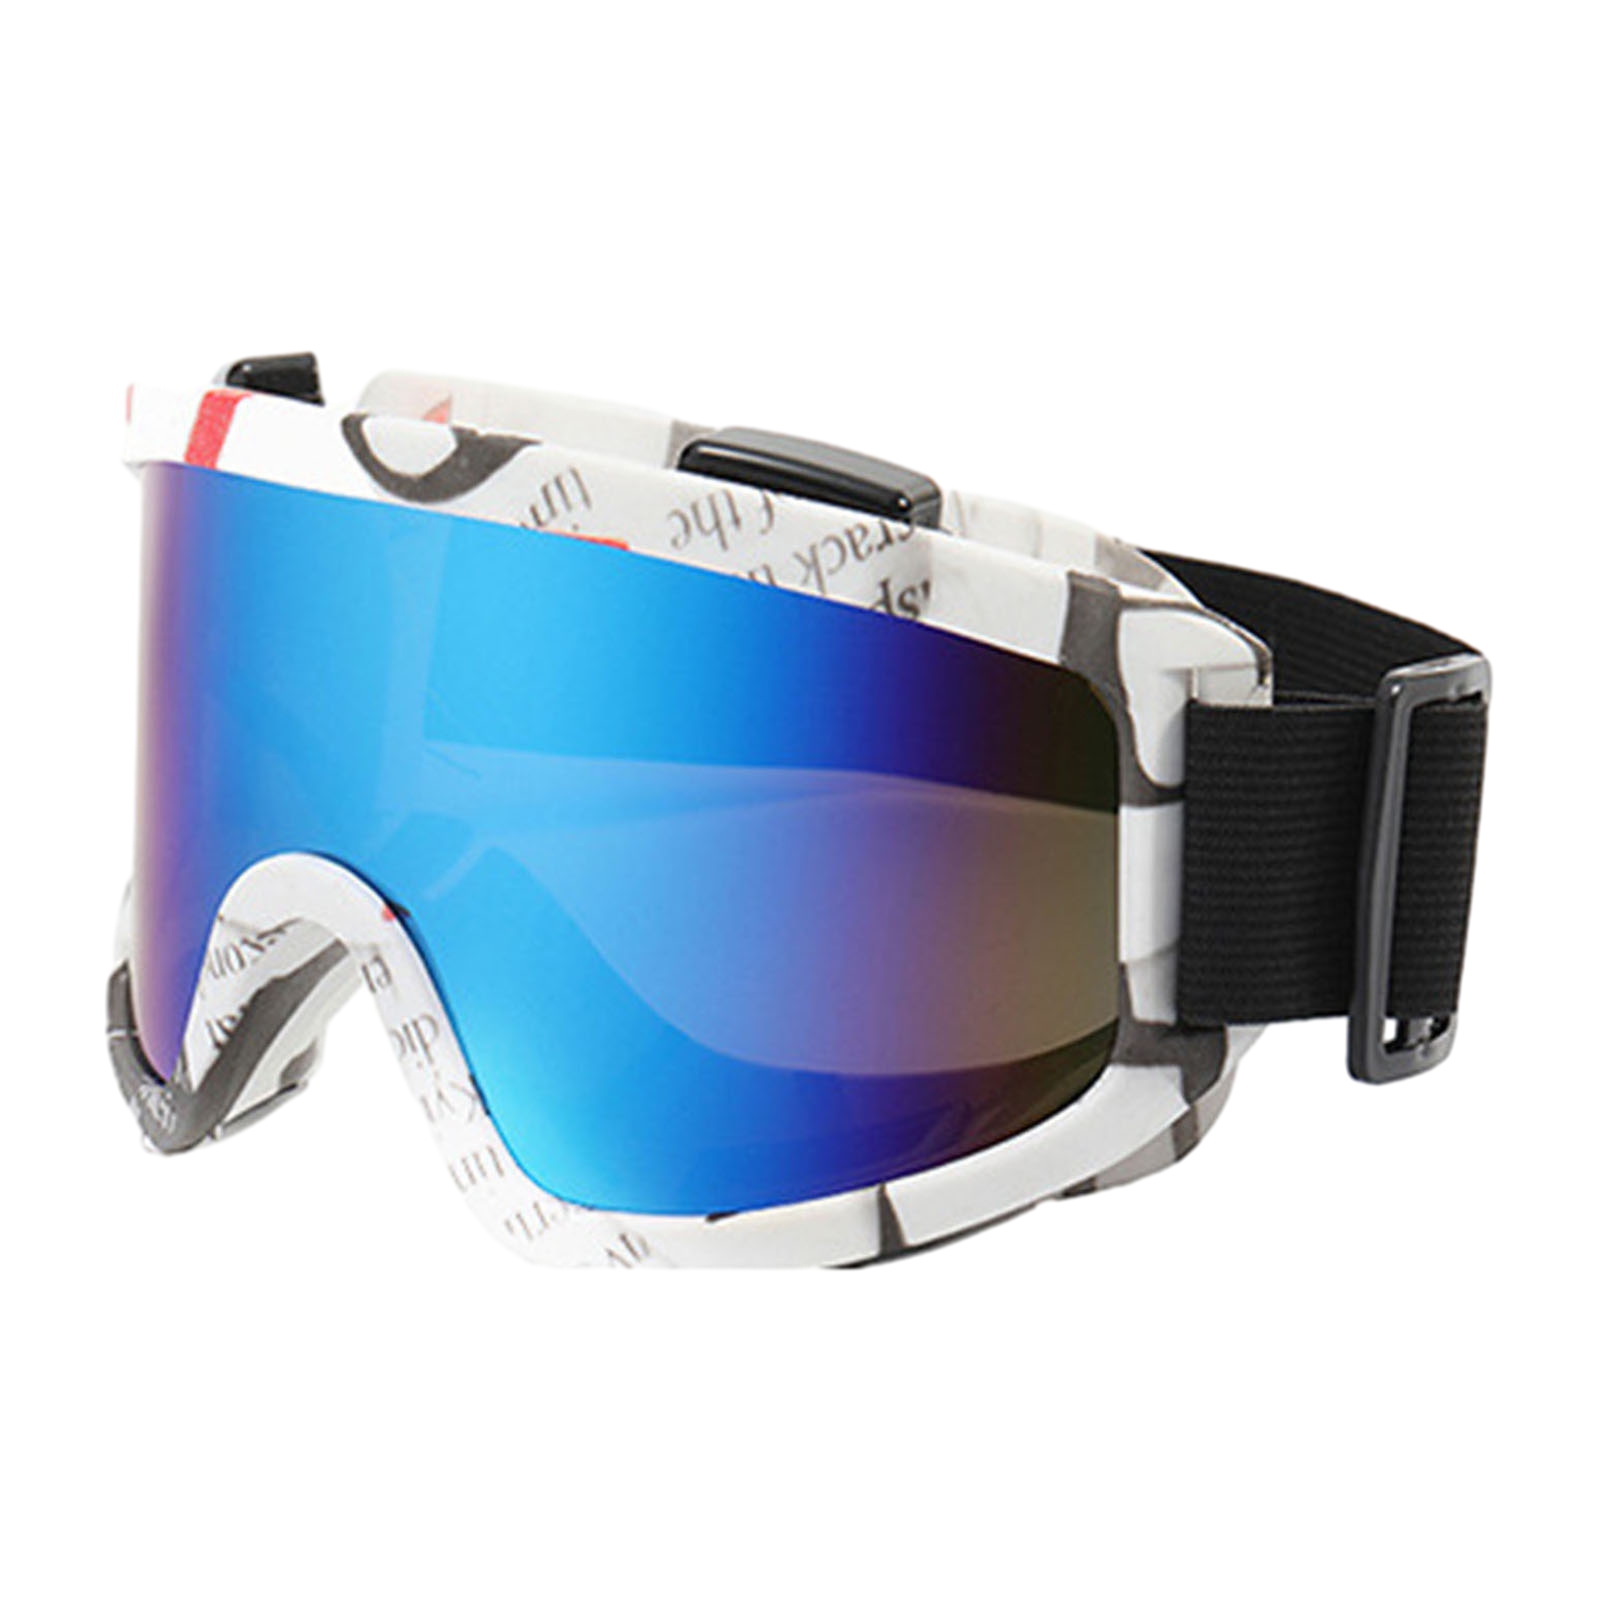 Ettsollp Winter Ski Goggles Winter Outdoor Ski Goggles for Men Women ...